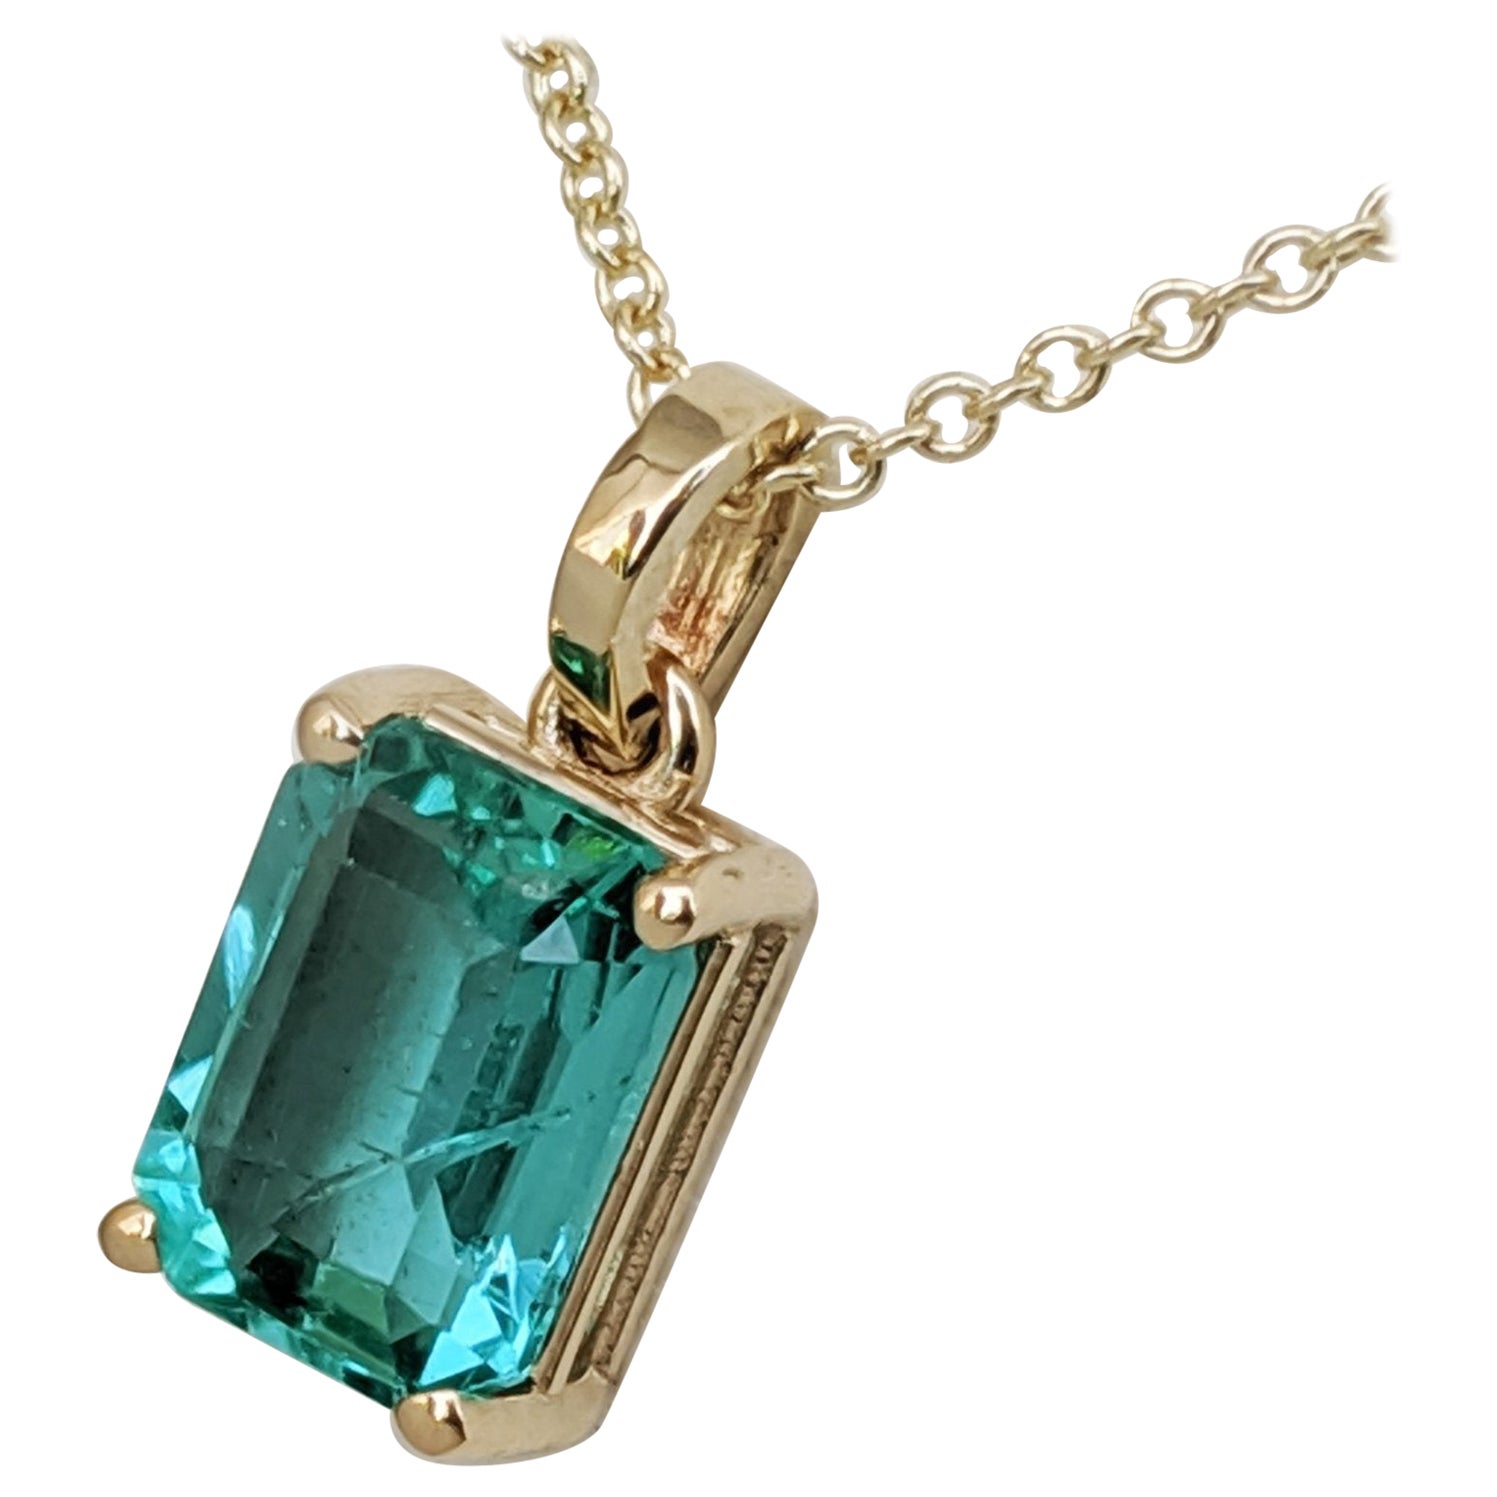 NO RESERVE! 1.44 Carat Emerald - 14 kt. Gold - Pendant Necklace For Sale